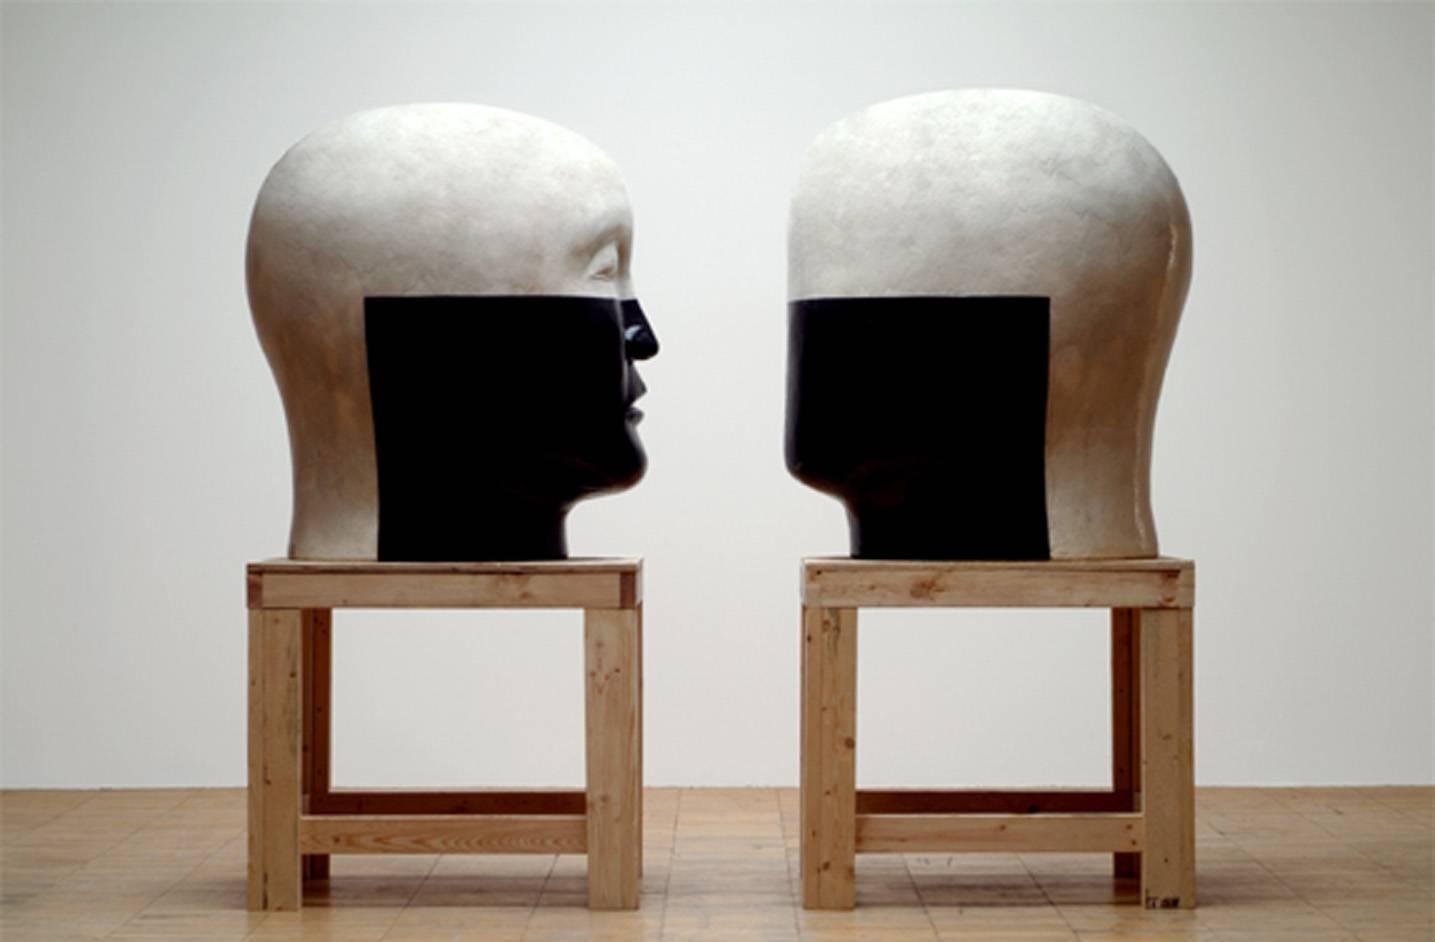 Jun Kaneko Figurative Sculpture - Heads 03-11-14